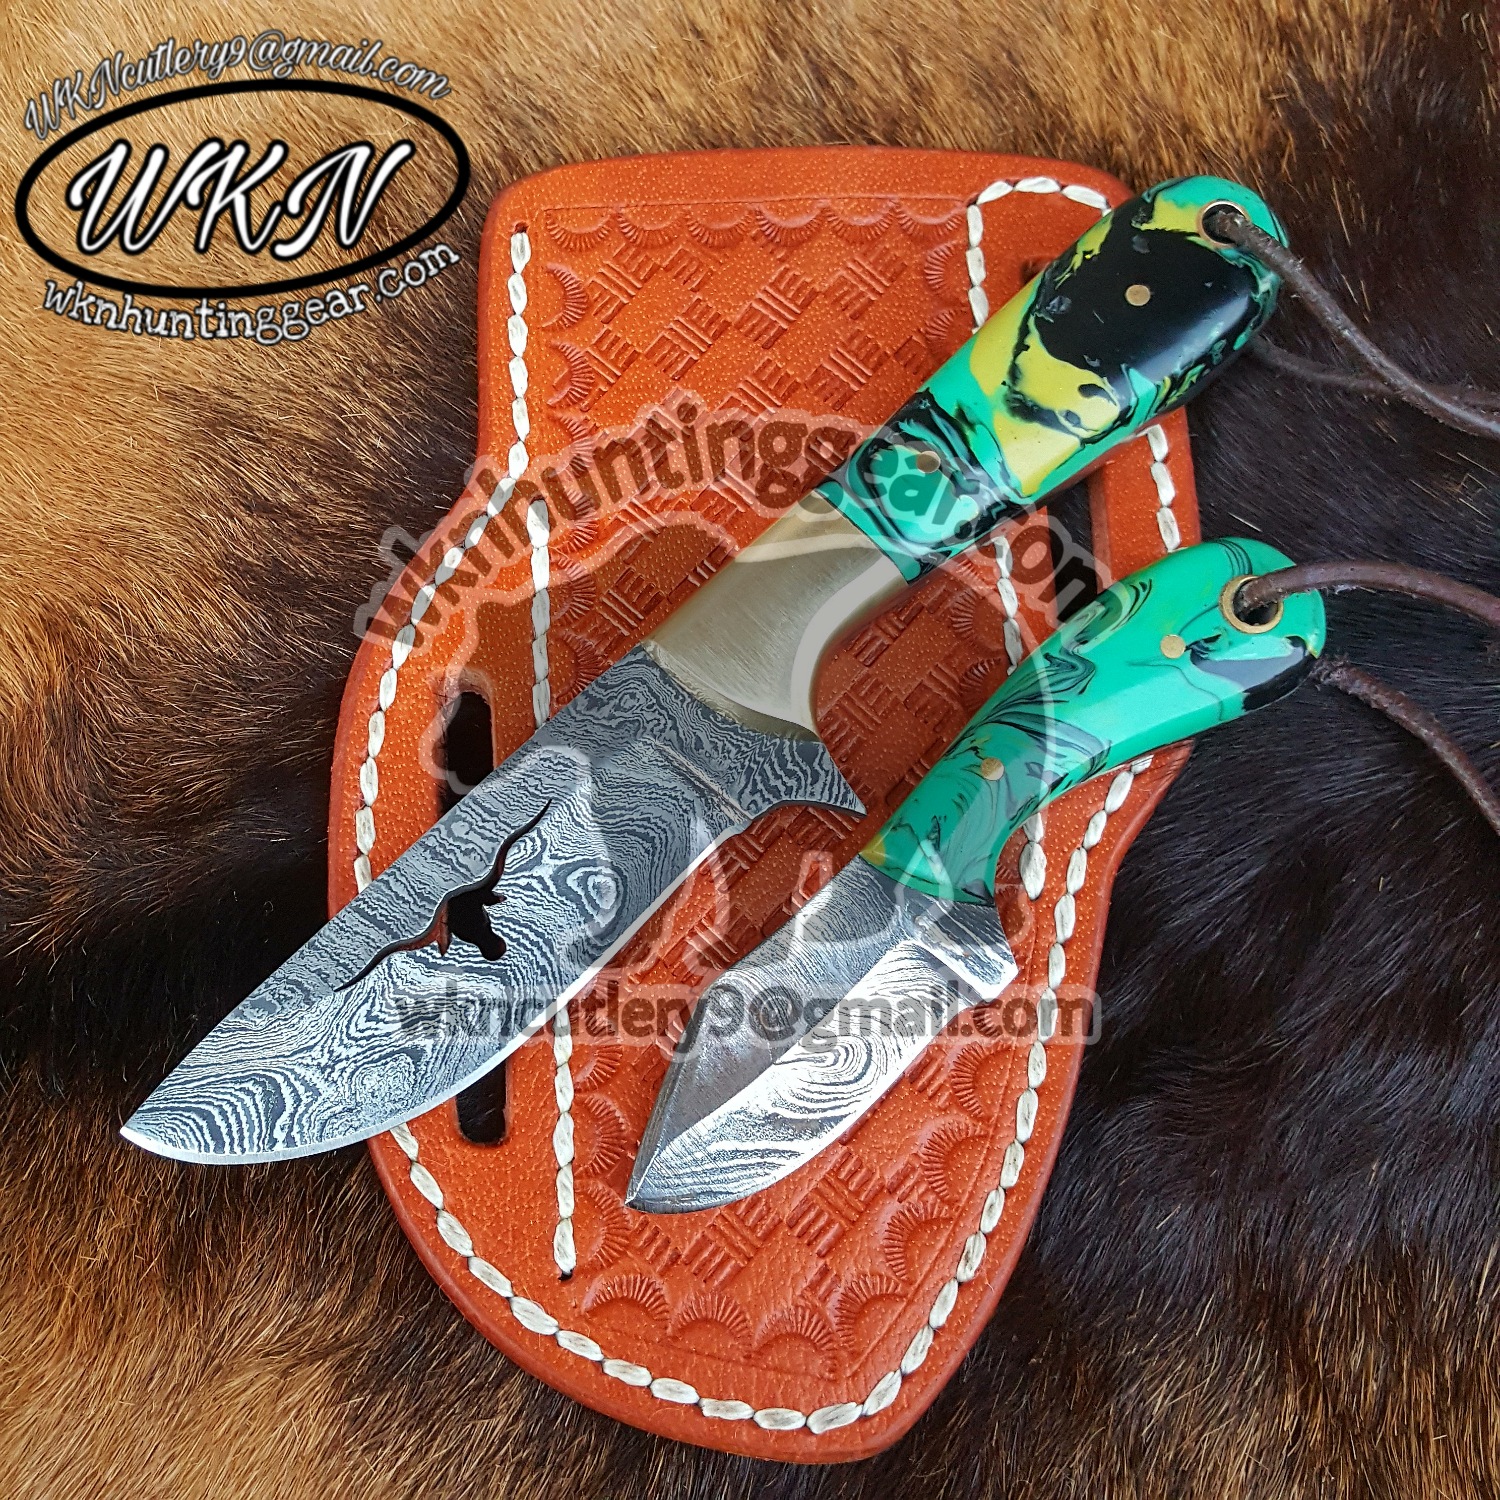 Cowboy Knife and Sheath Set - Damascus Steel - WKN Hunting Gears